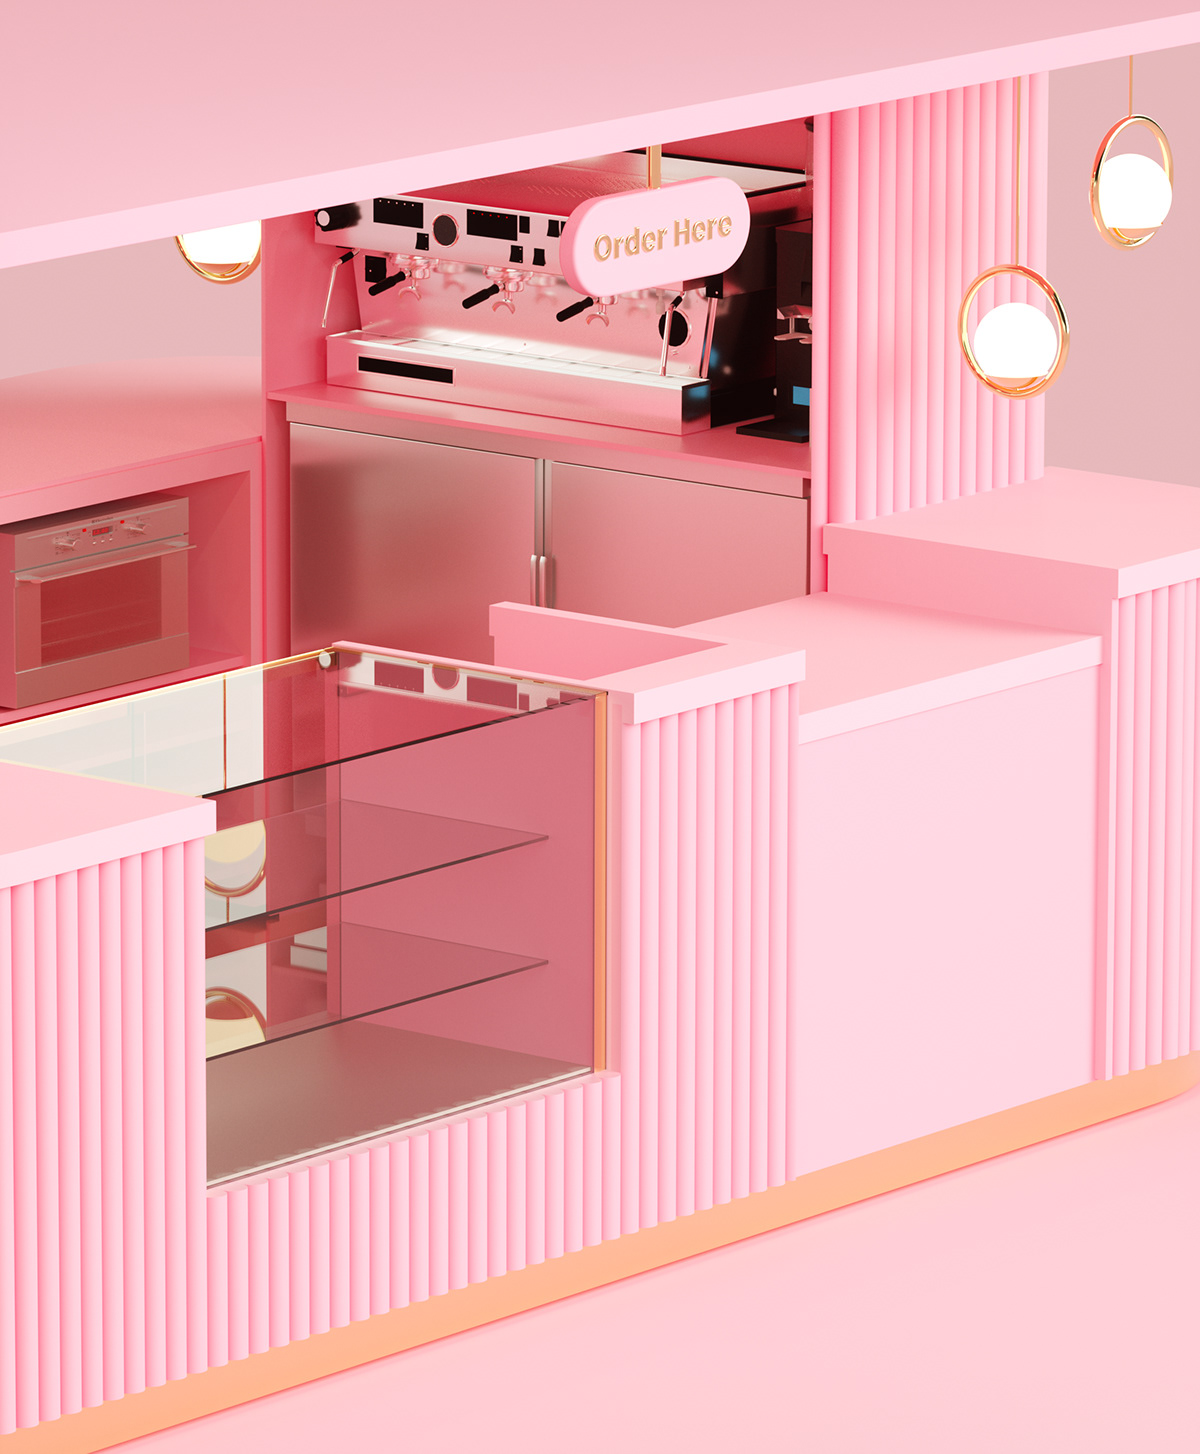 booth cafe Coffee Exhibition  girl boss Kiosk Mall kiosk pink